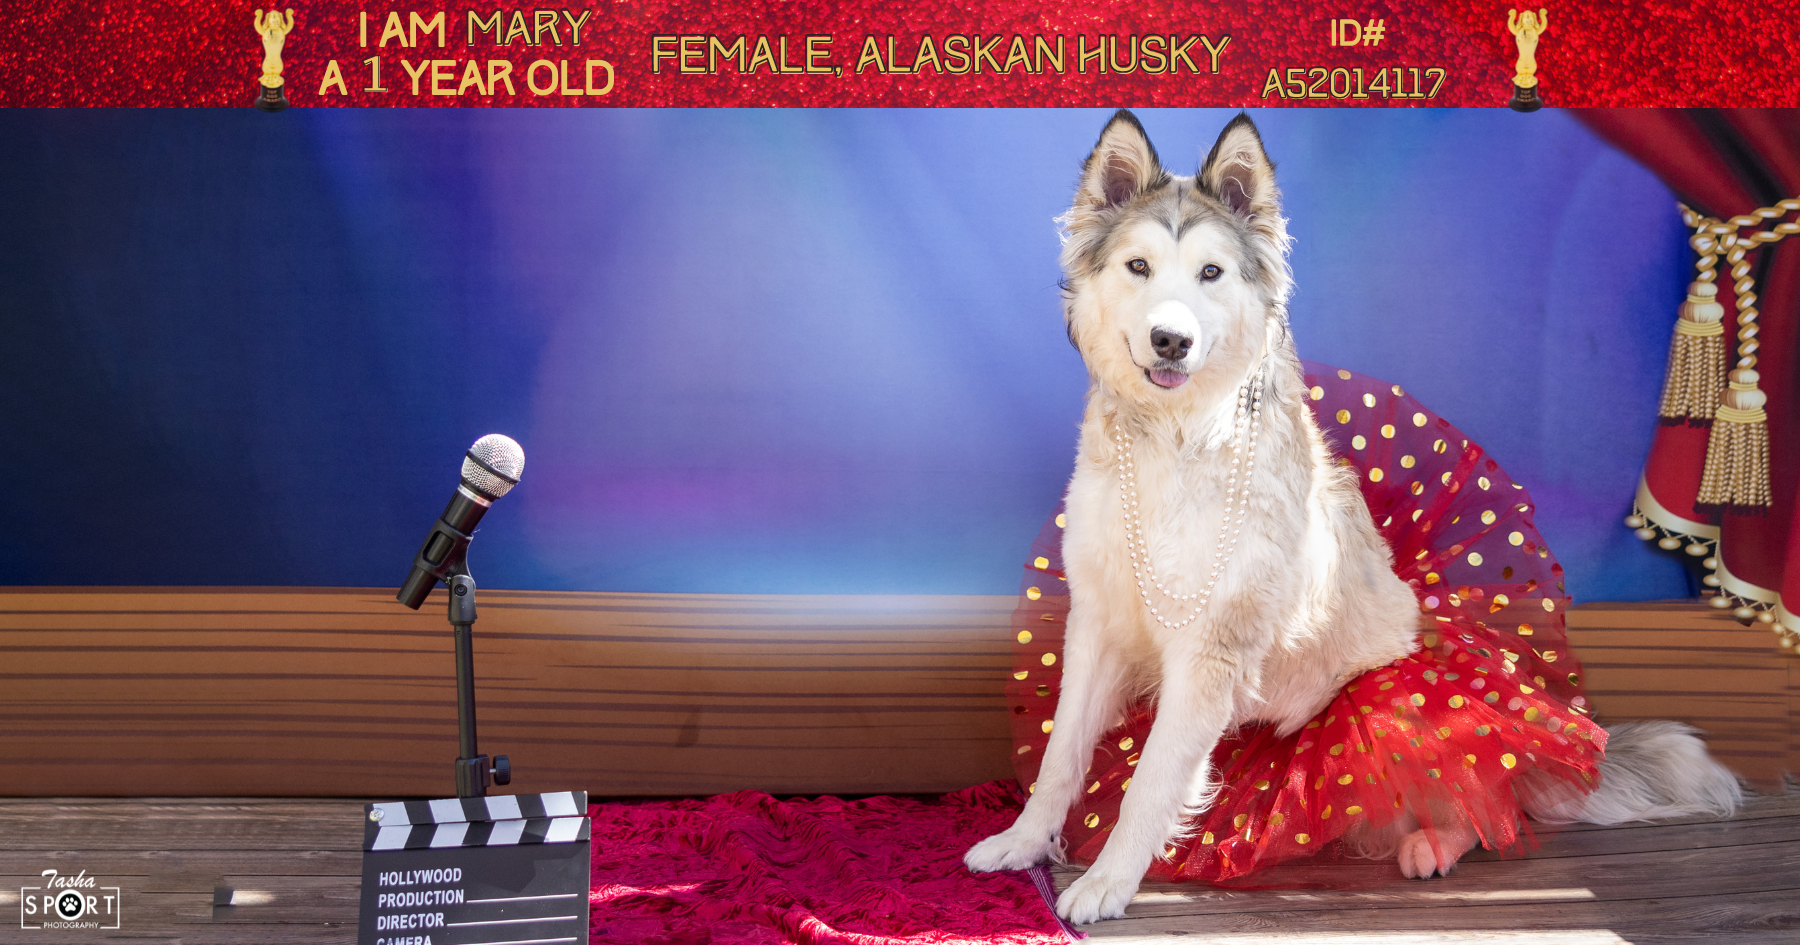 does the alaskan husky have rabies